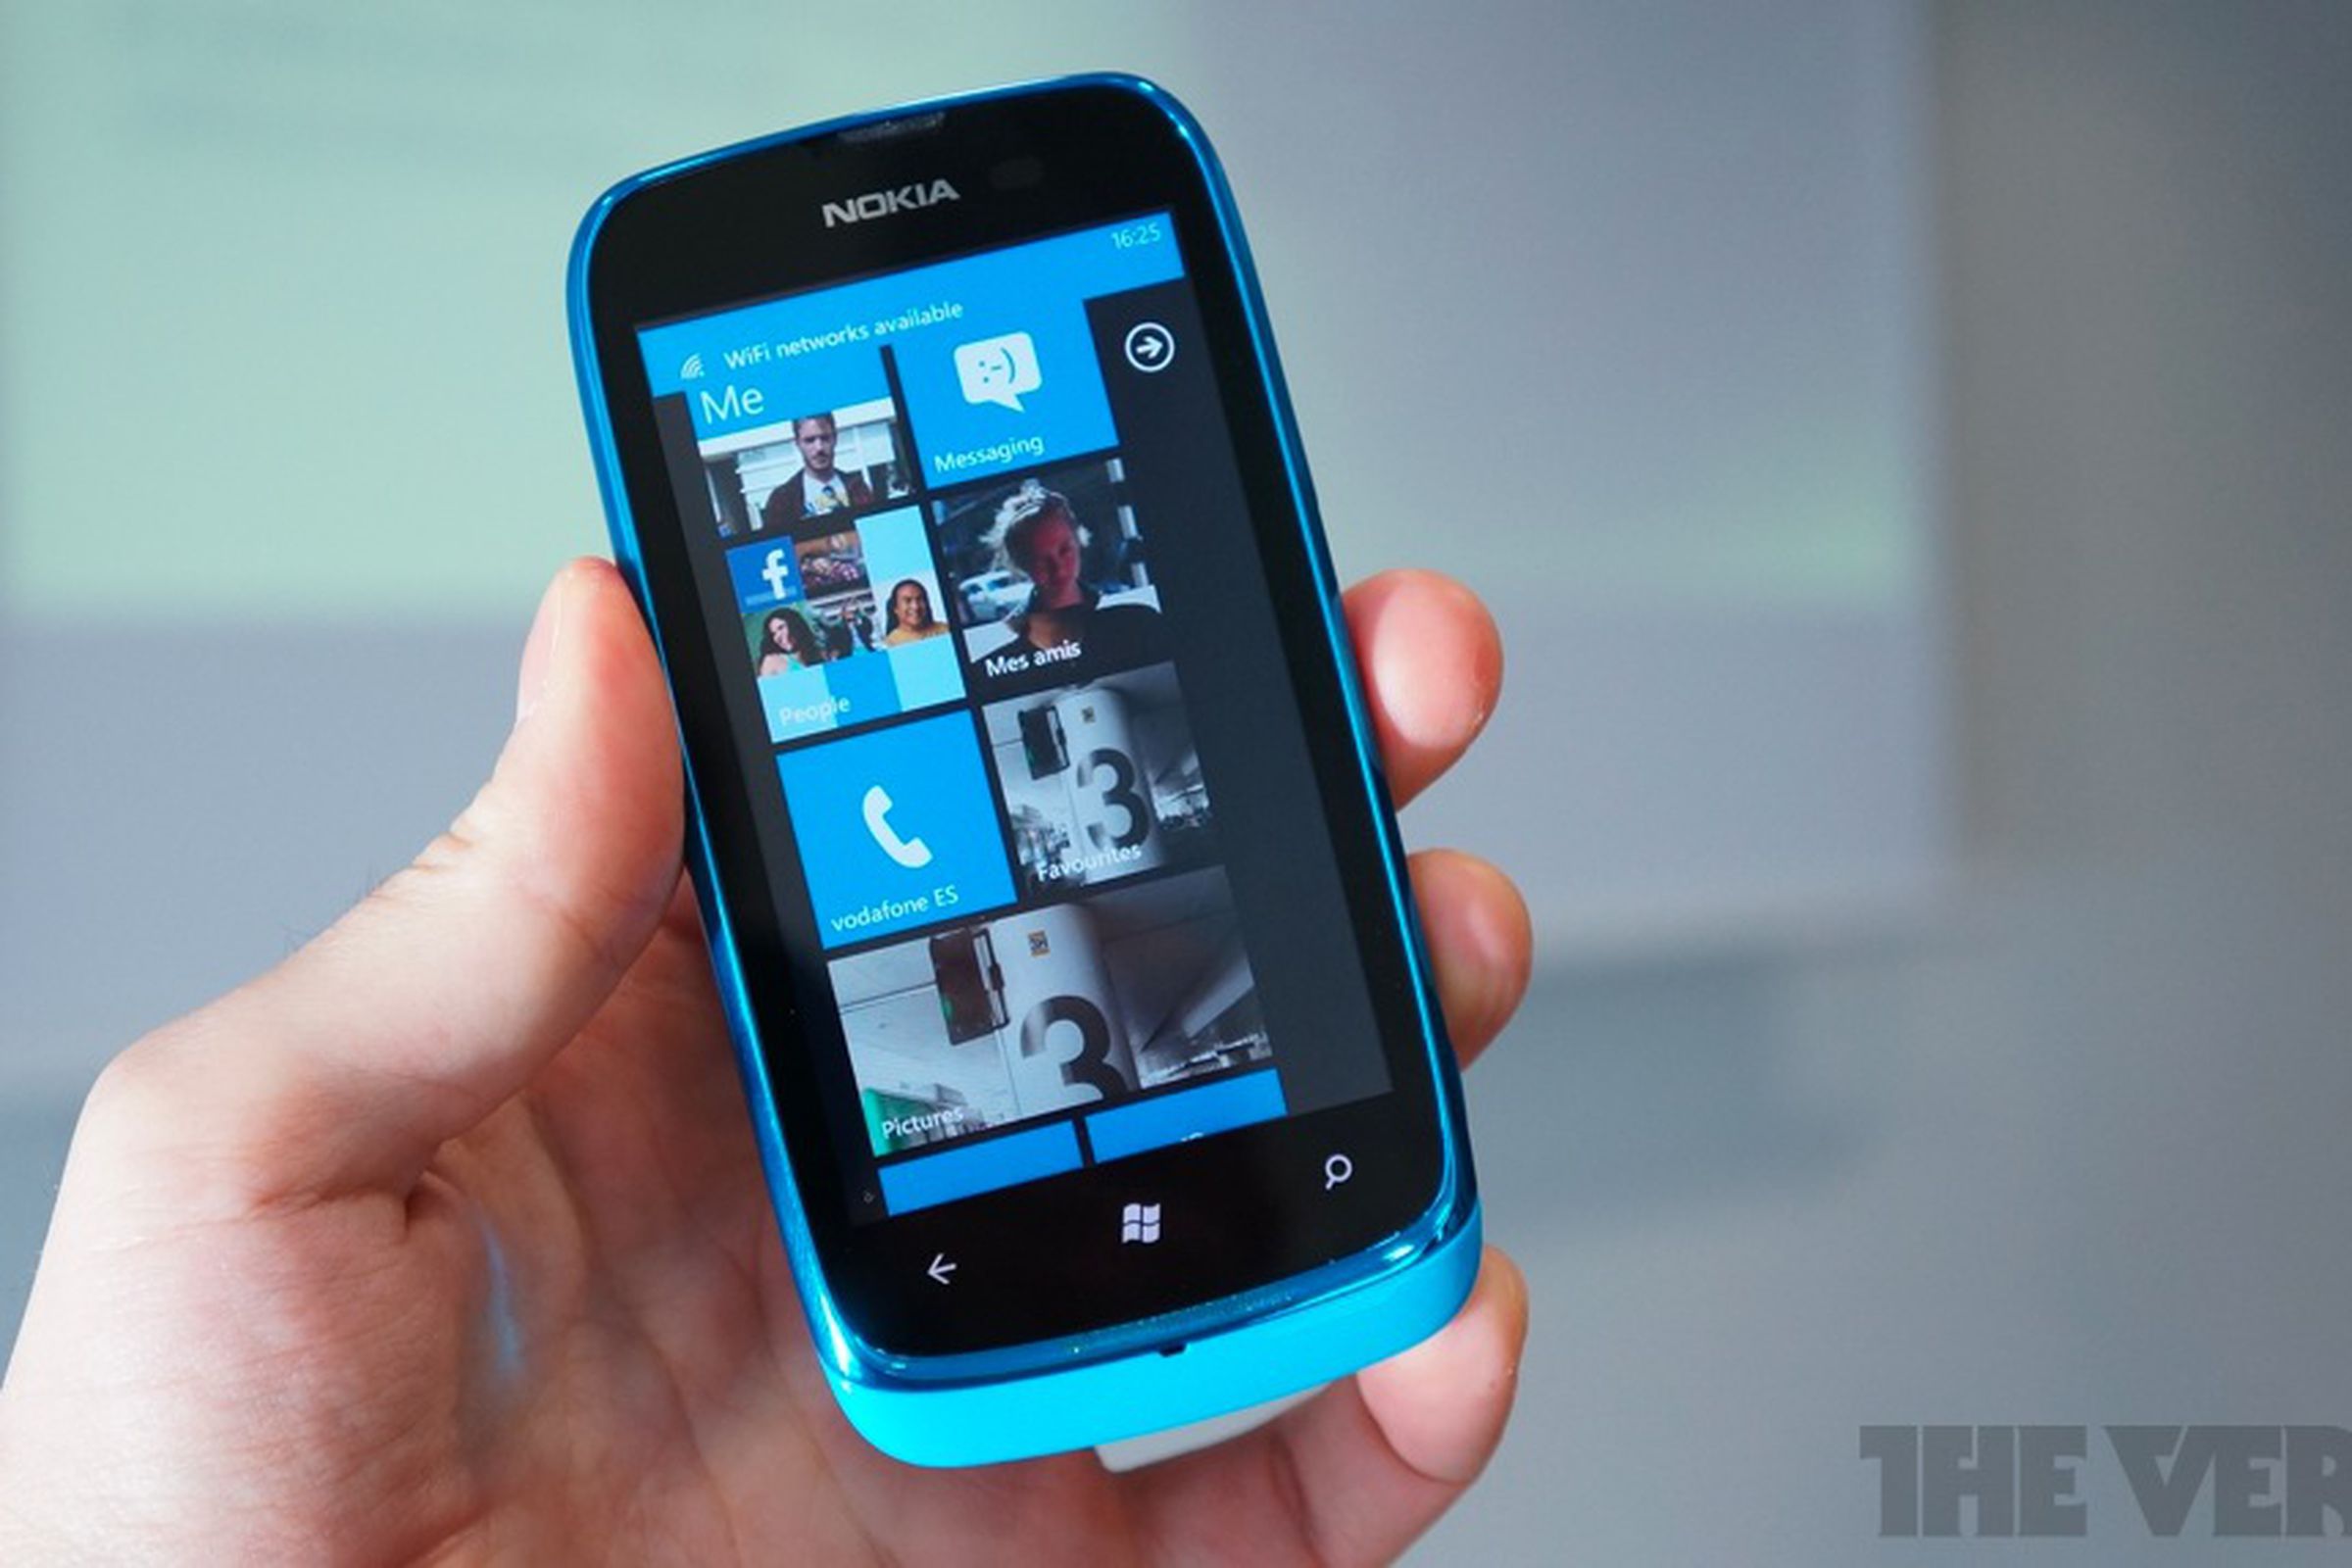 Gallery Photo: Nokia Lumia 610 hands-on photos